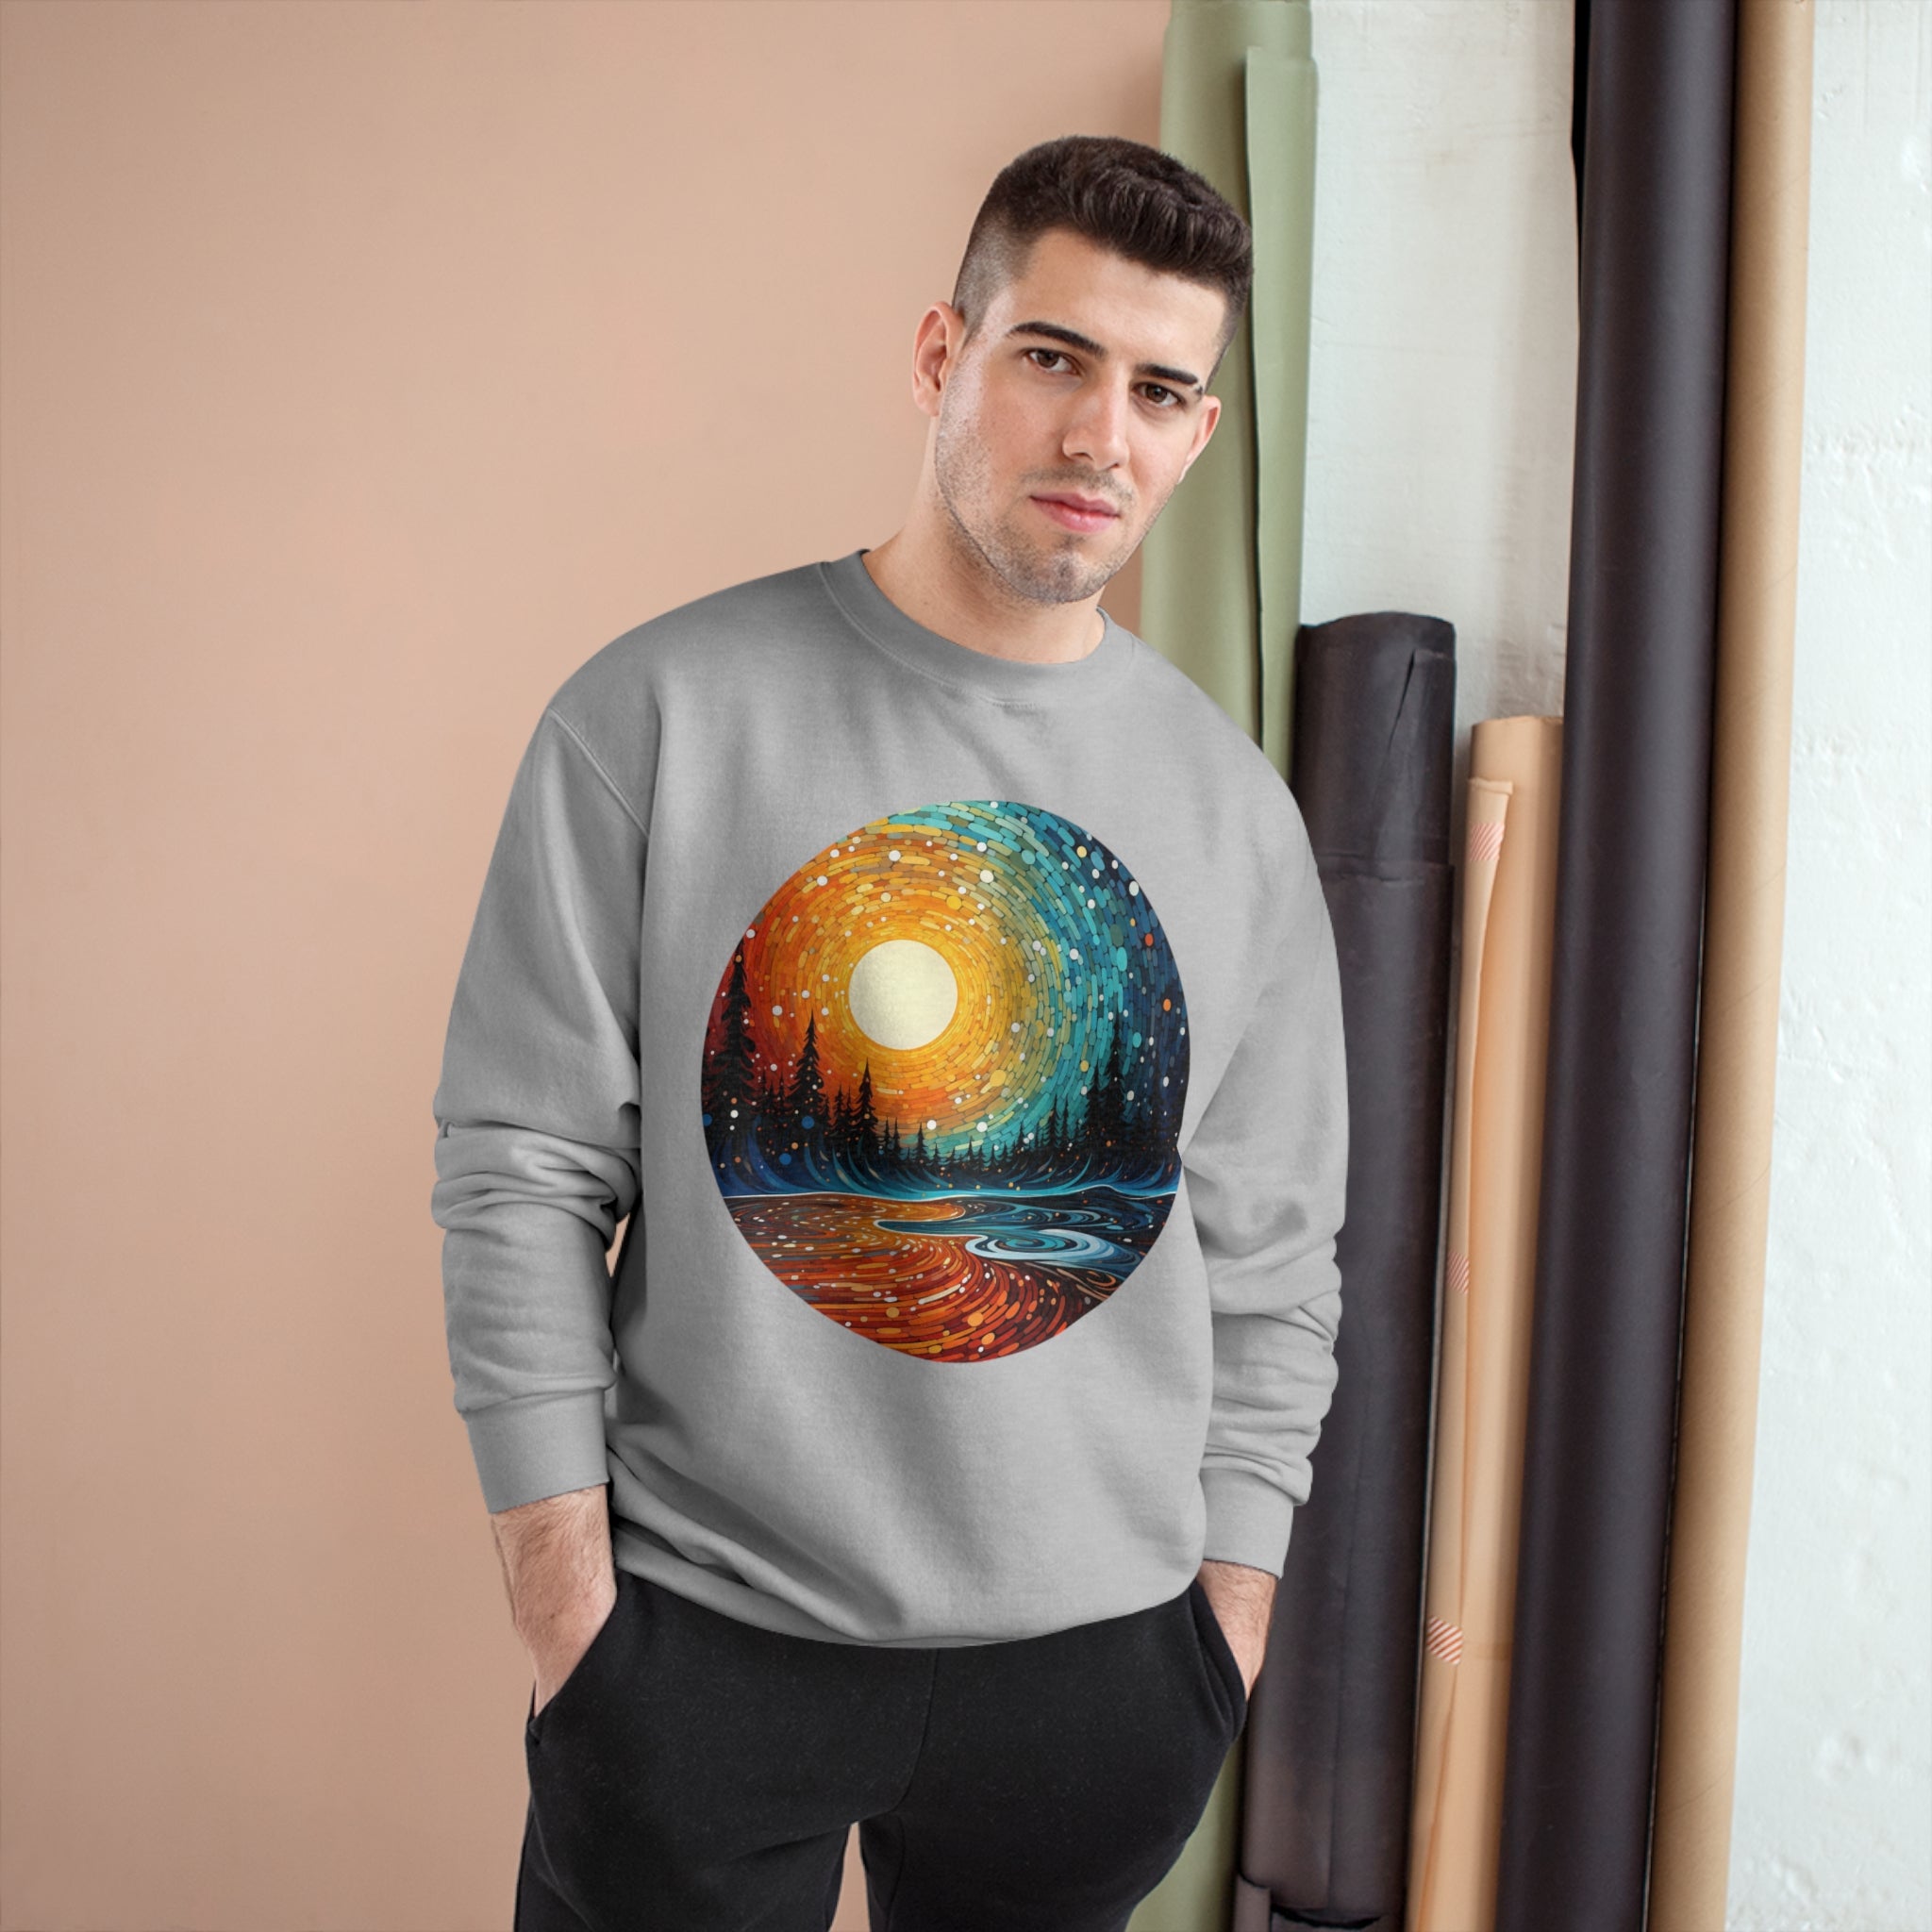 Champion Sweatshirt - Abstract Designs 04